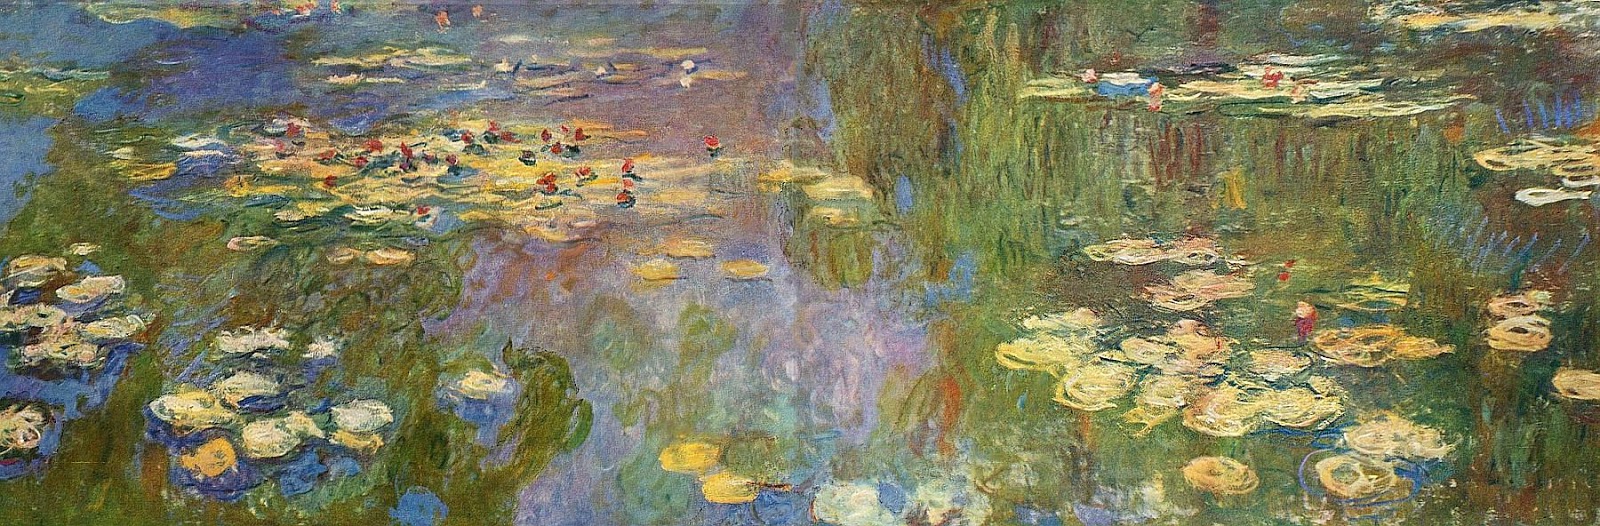 Claude+Monet-1840-1926 (984).jpg